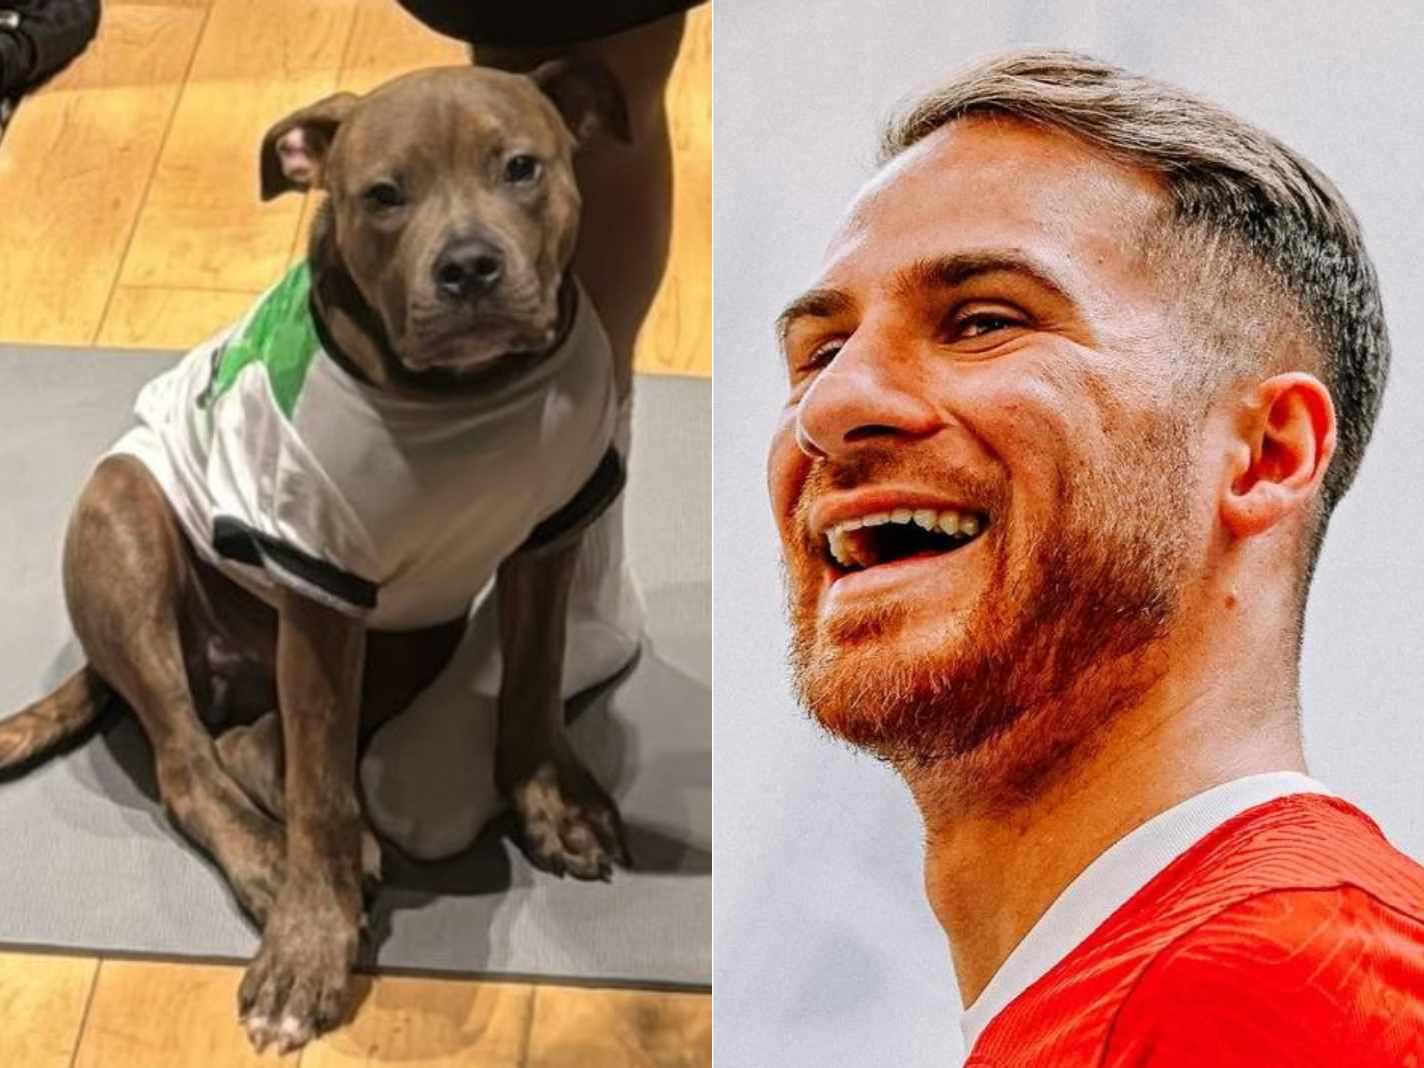 See Alexis Mac Allister Make Fans Melt By Making Pet Dog Wear Full Liverpool Gear